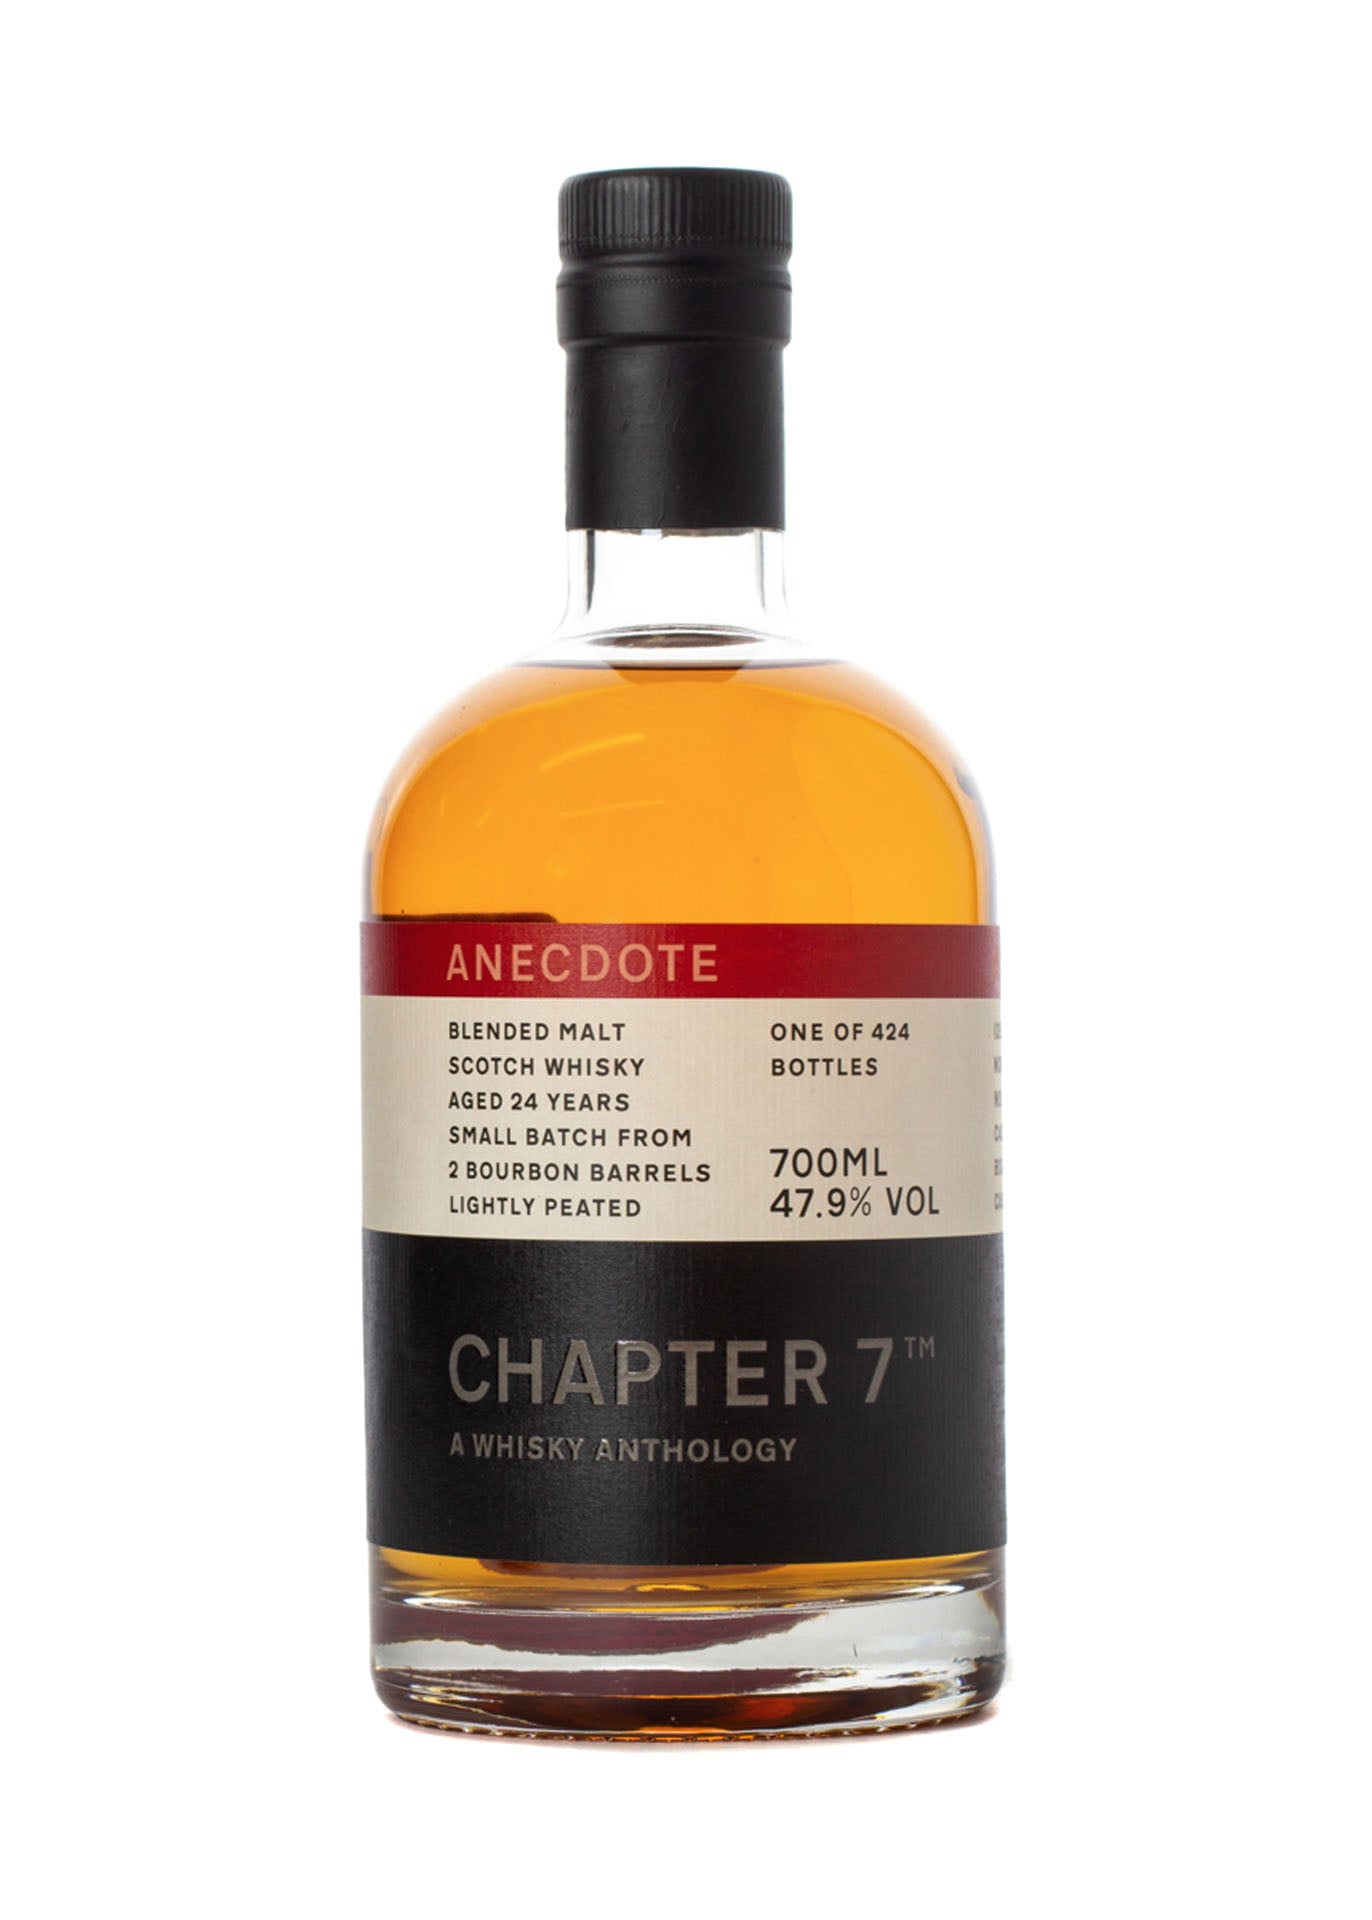 Chapter 7 Anecdote Blended Malt Scotch Whisky